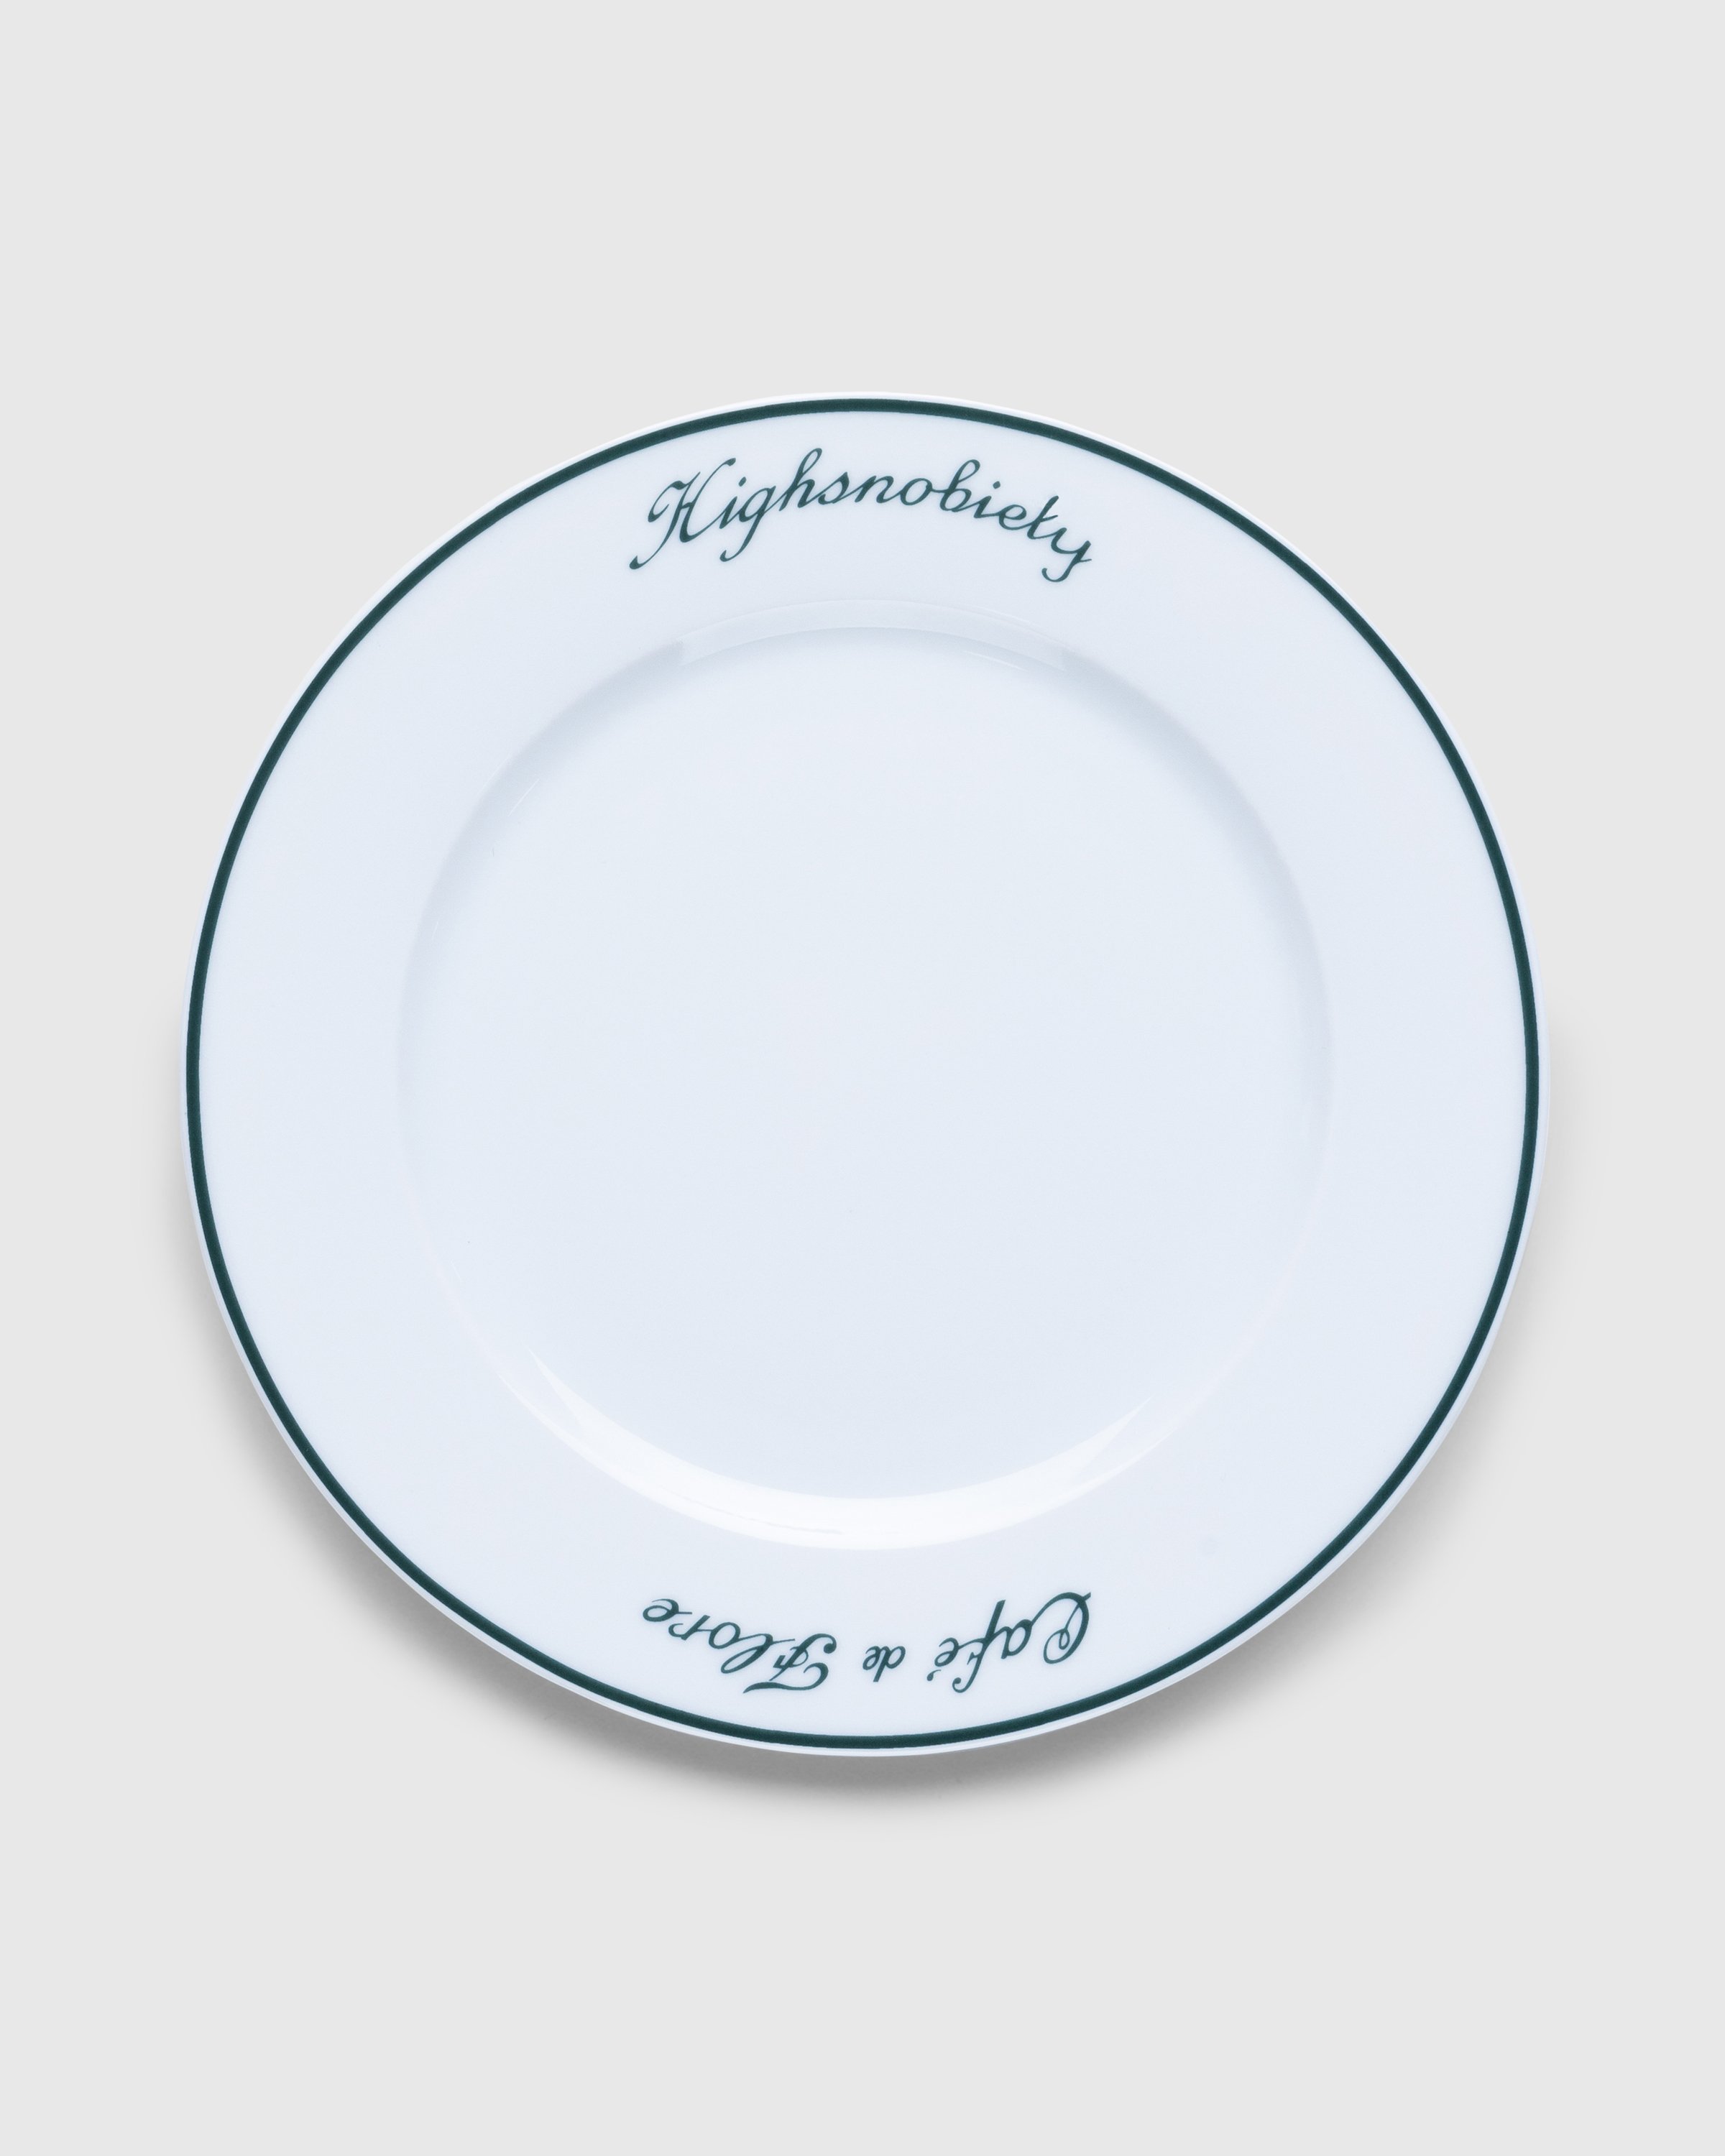 Café de Flore x Highsnobiety - Plate - Lifestyle - White - Image 1